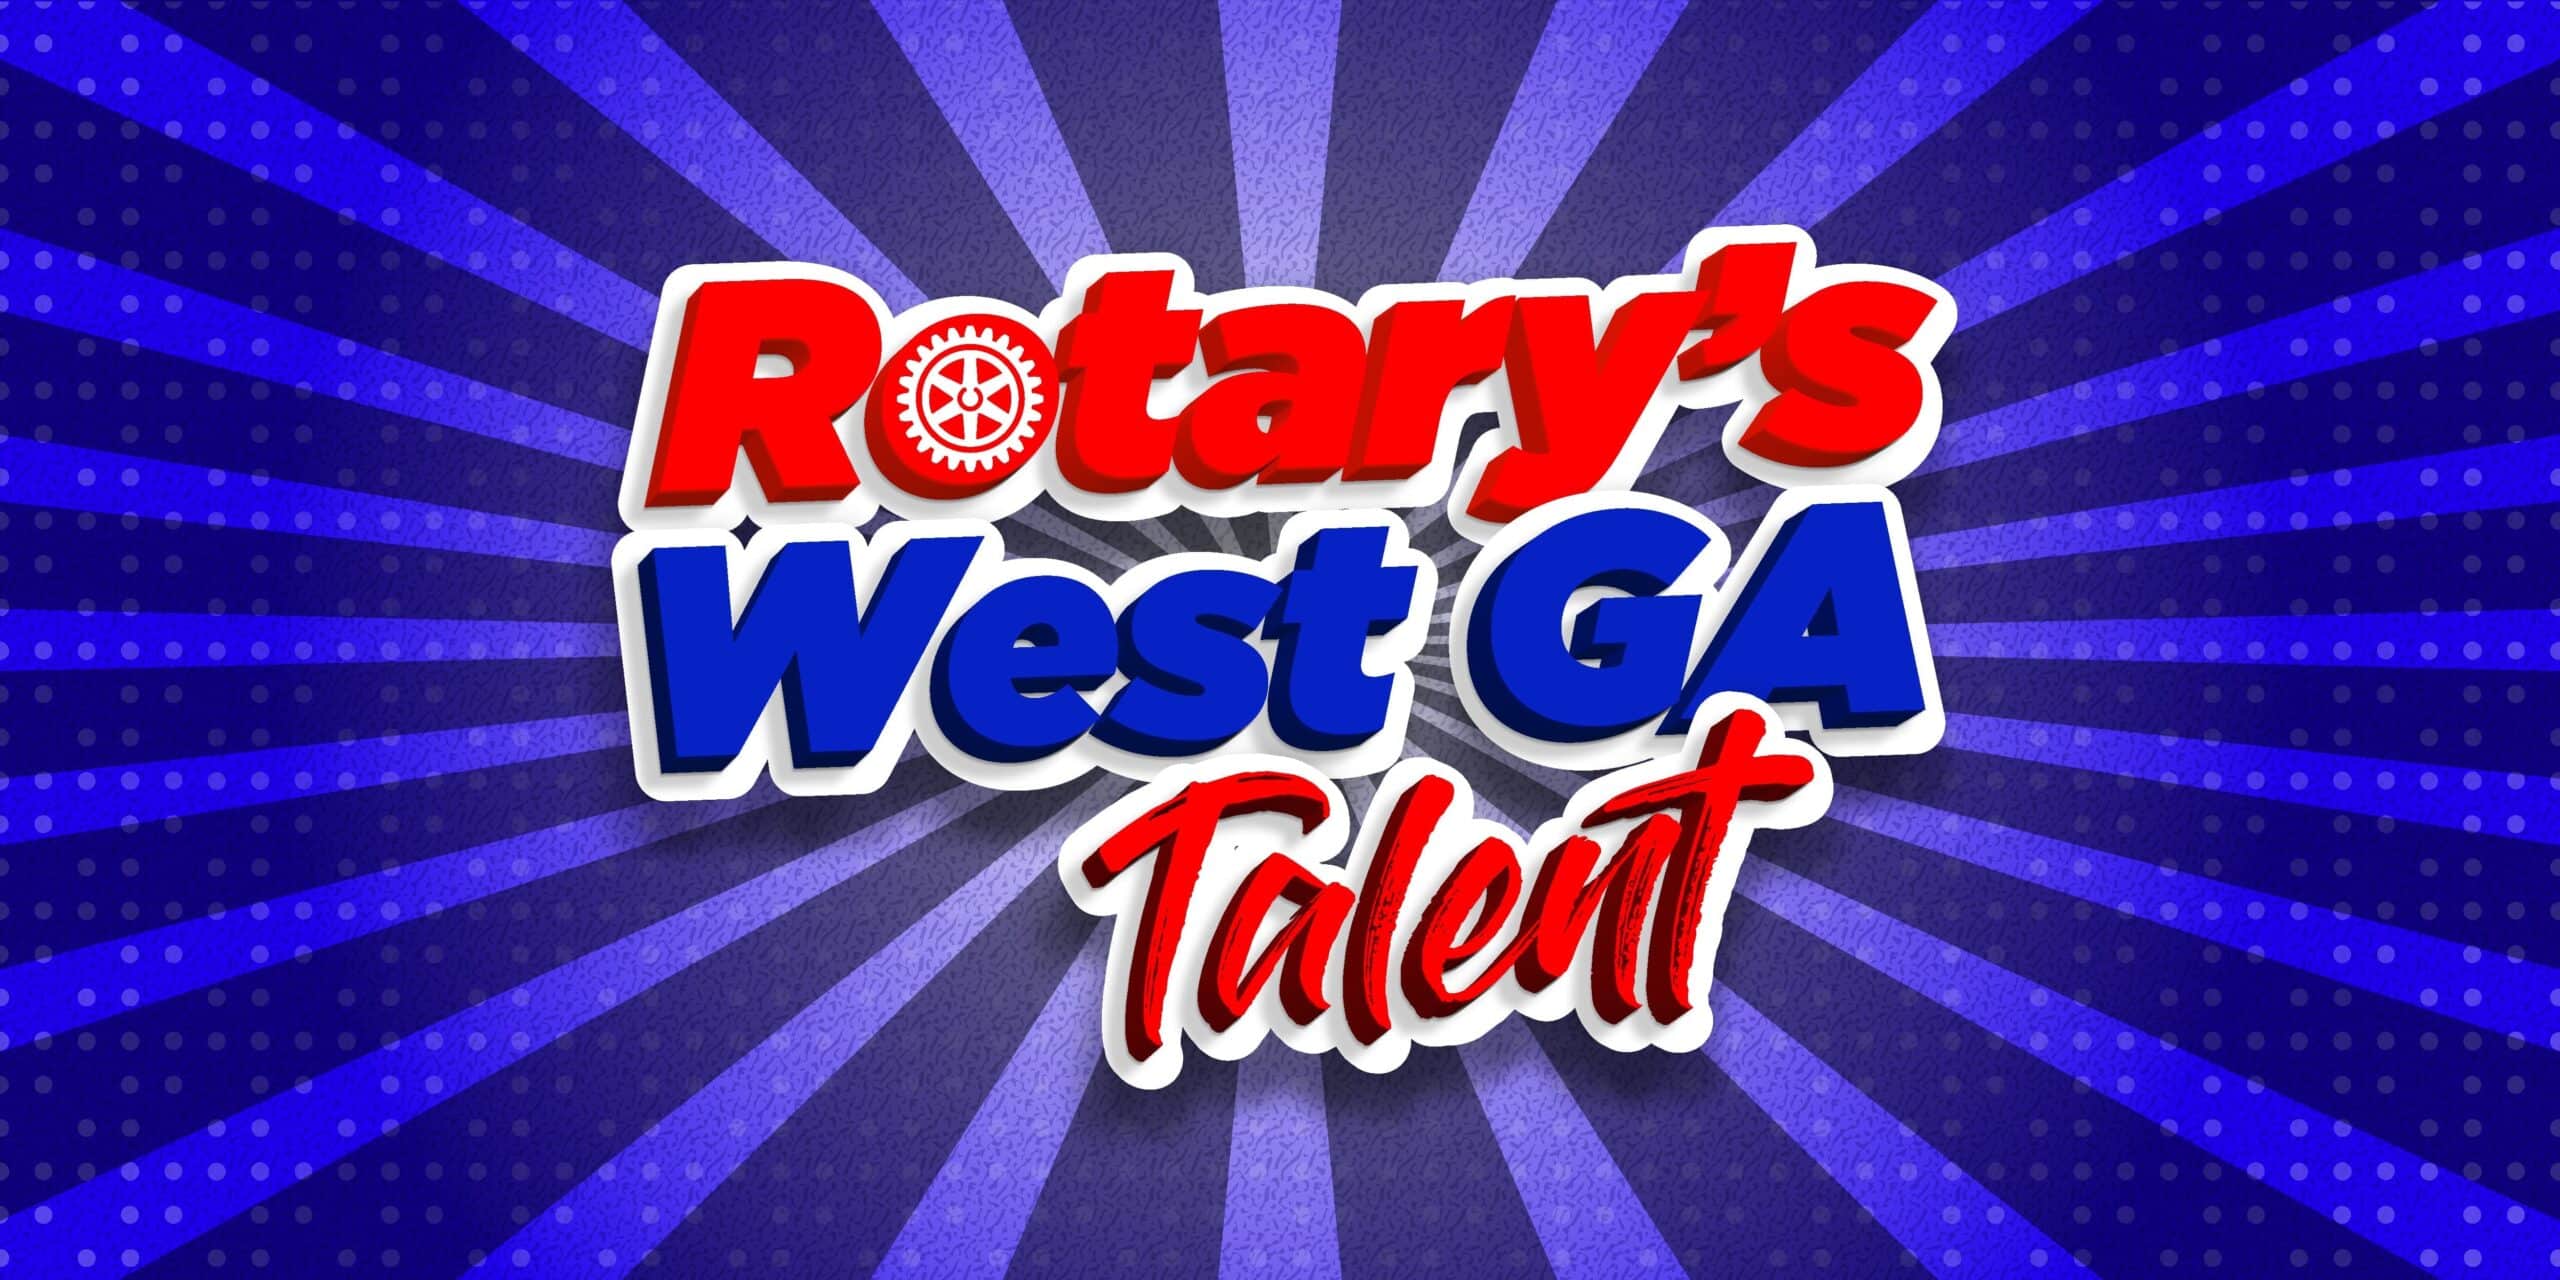 Rotary's West Georgia Talent